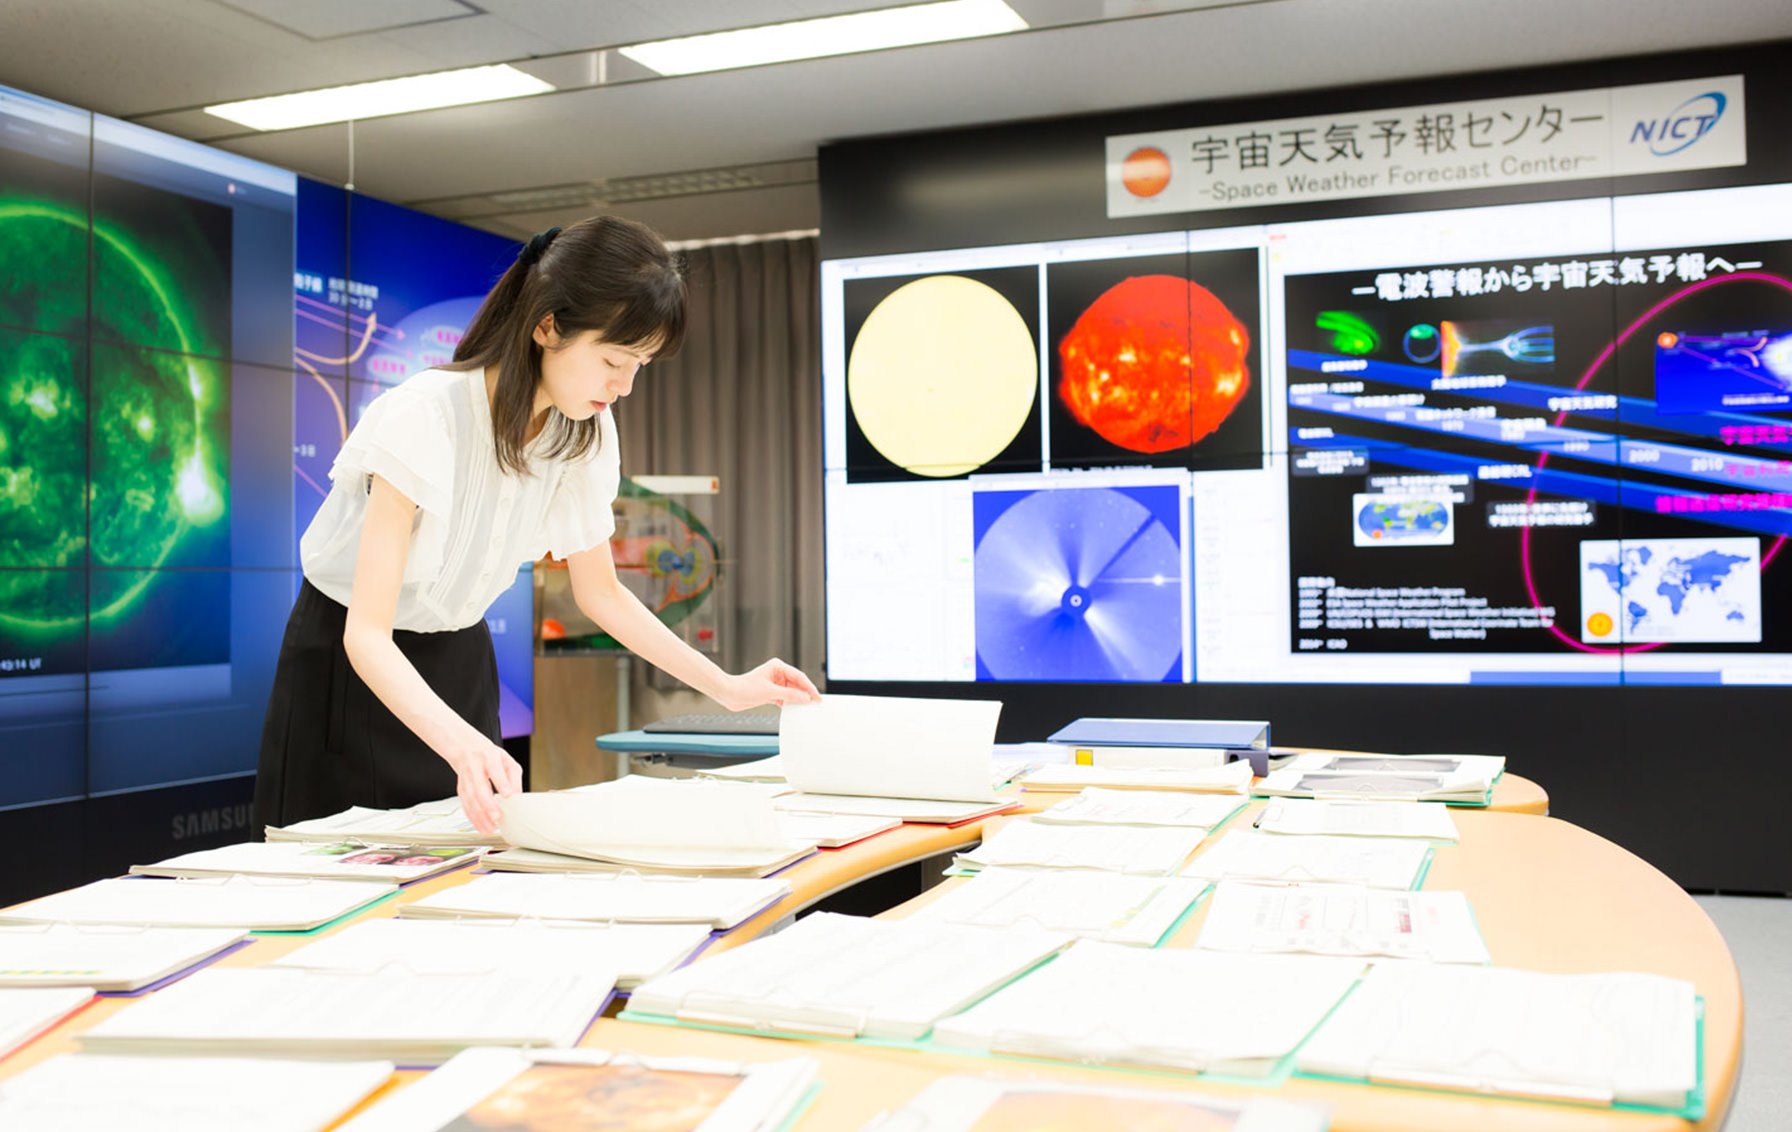 Senior Researcher Nakamizo checking the space weather forecast data.